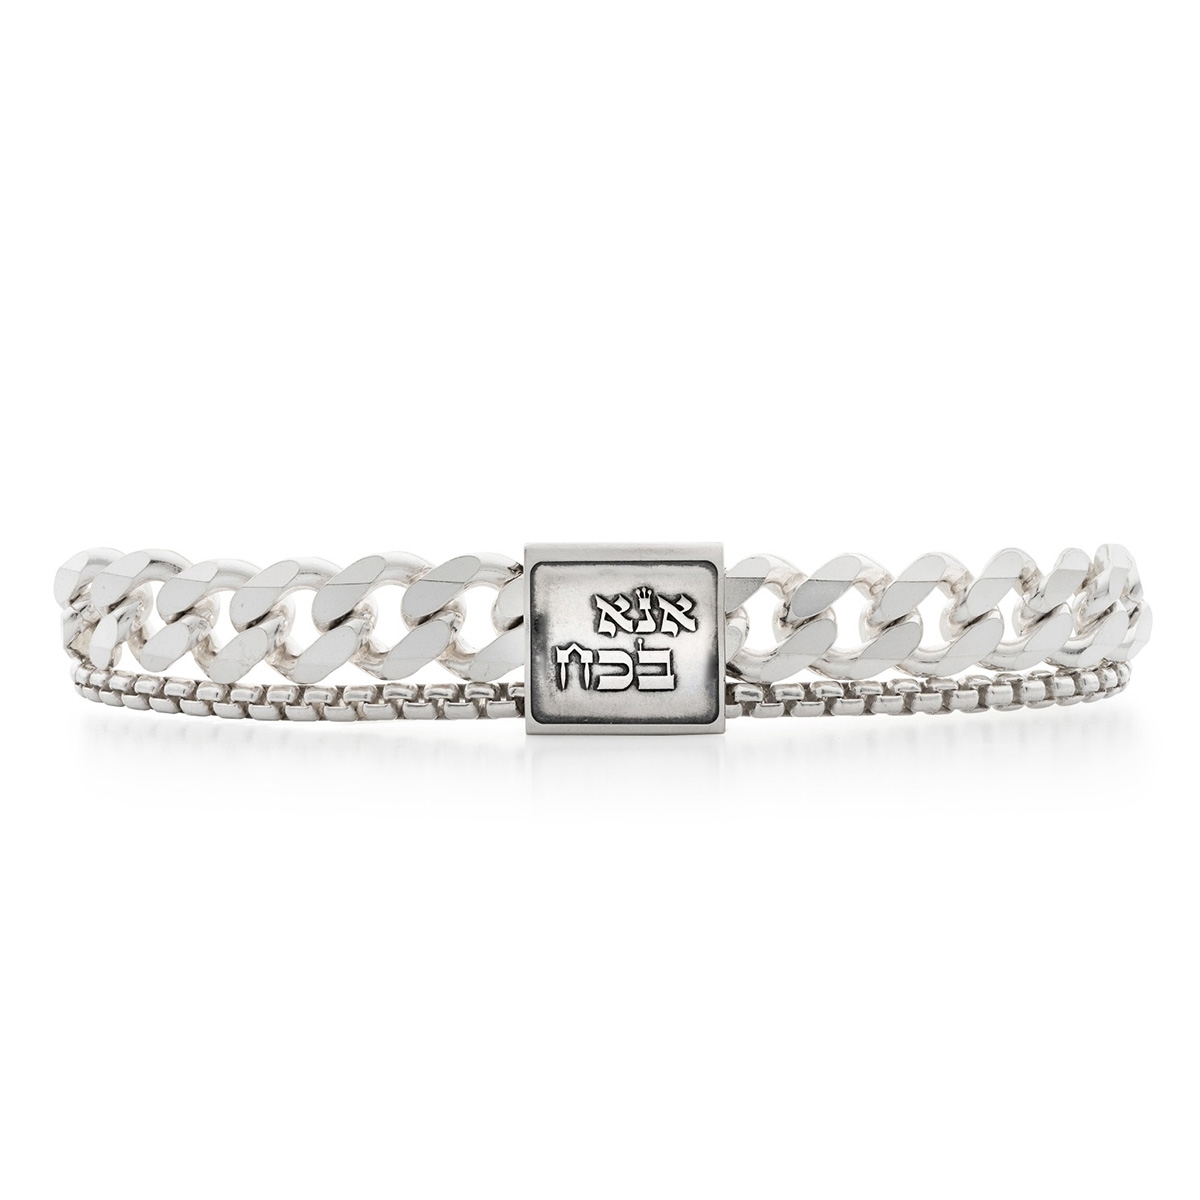 925 Sterling Silver Men's Bracelet with Ana Bekoach Pendant - 1